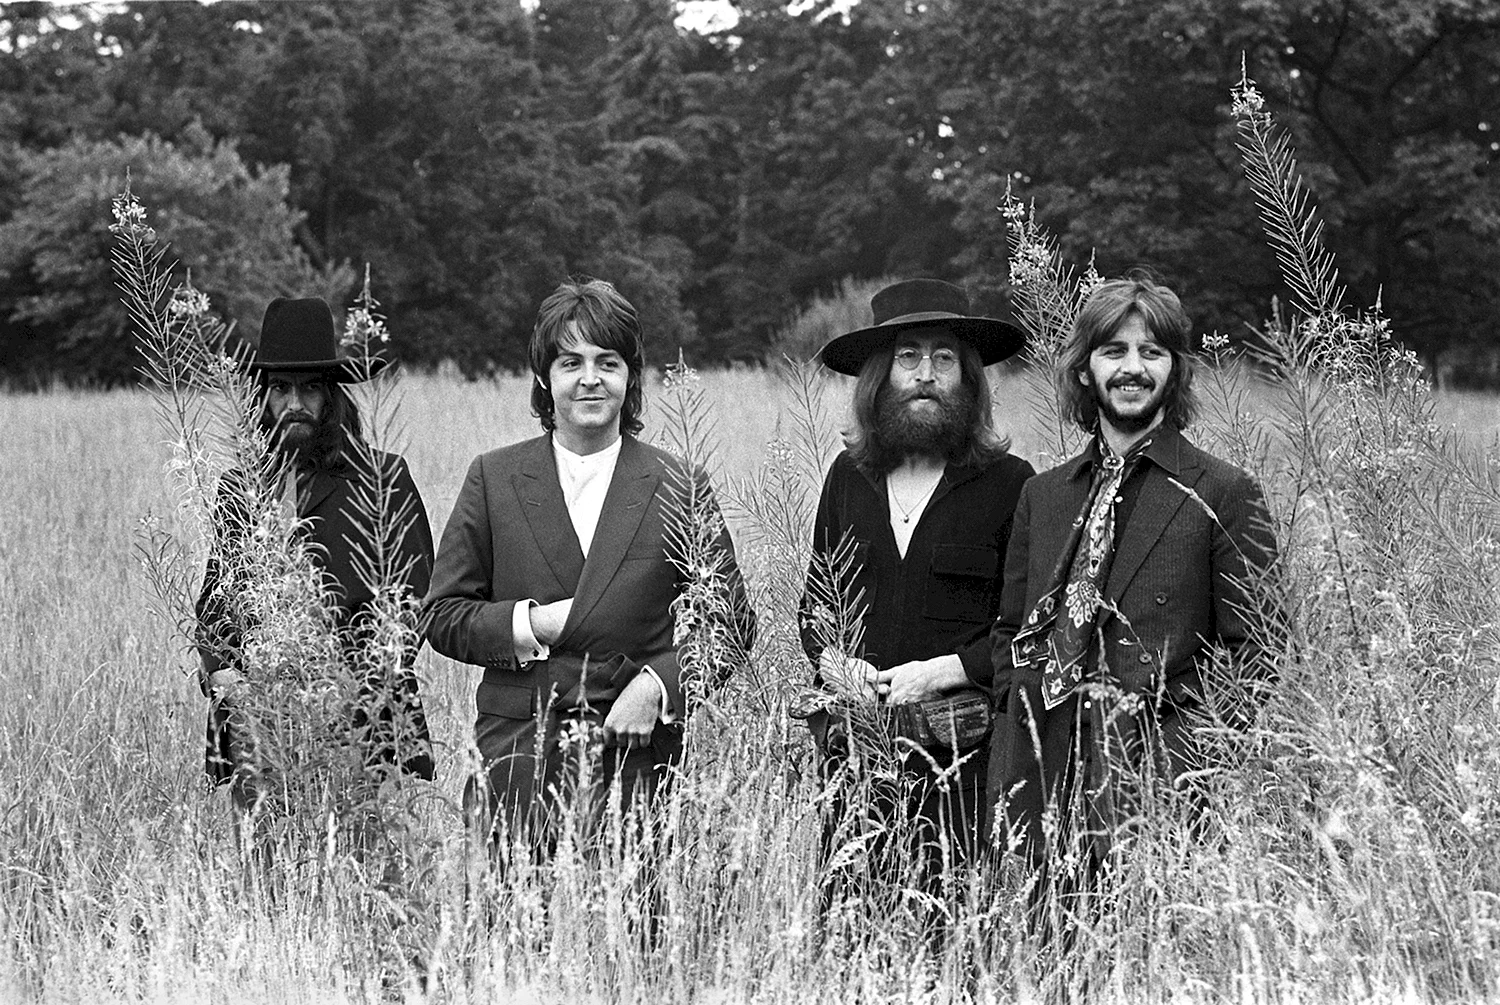 The Beatles 1969